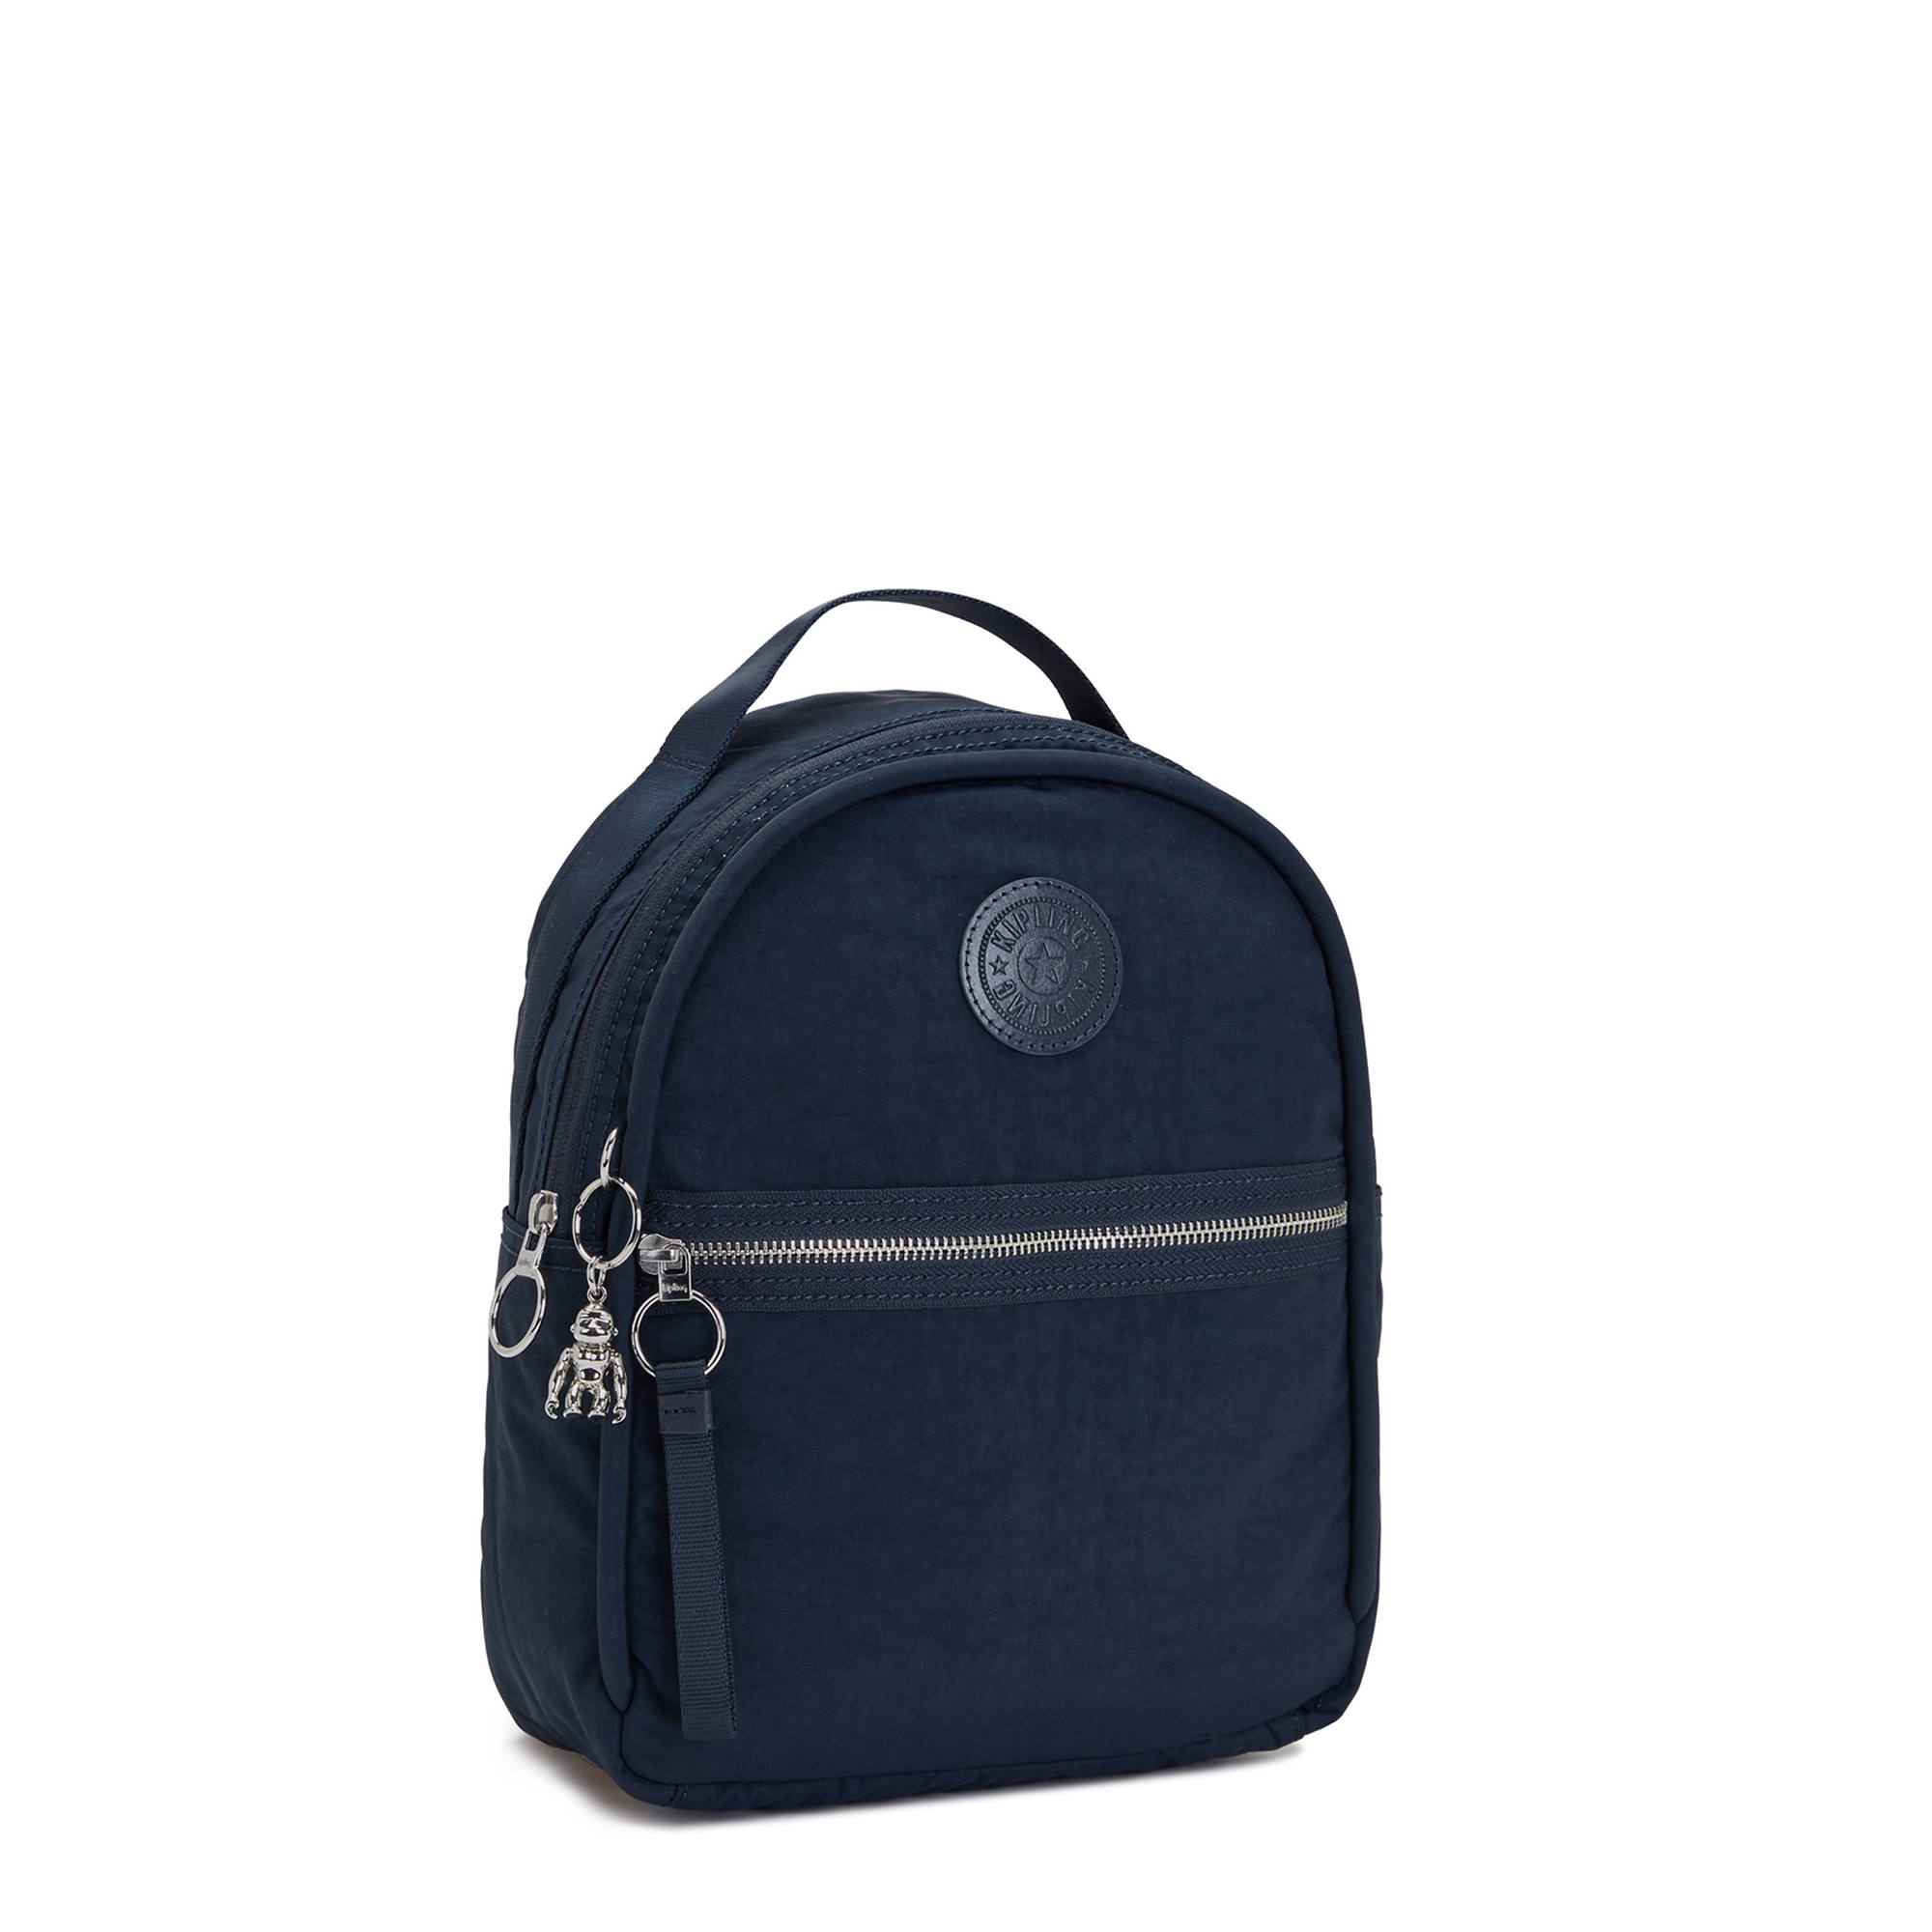 Kipling Kae Backpack | eBay